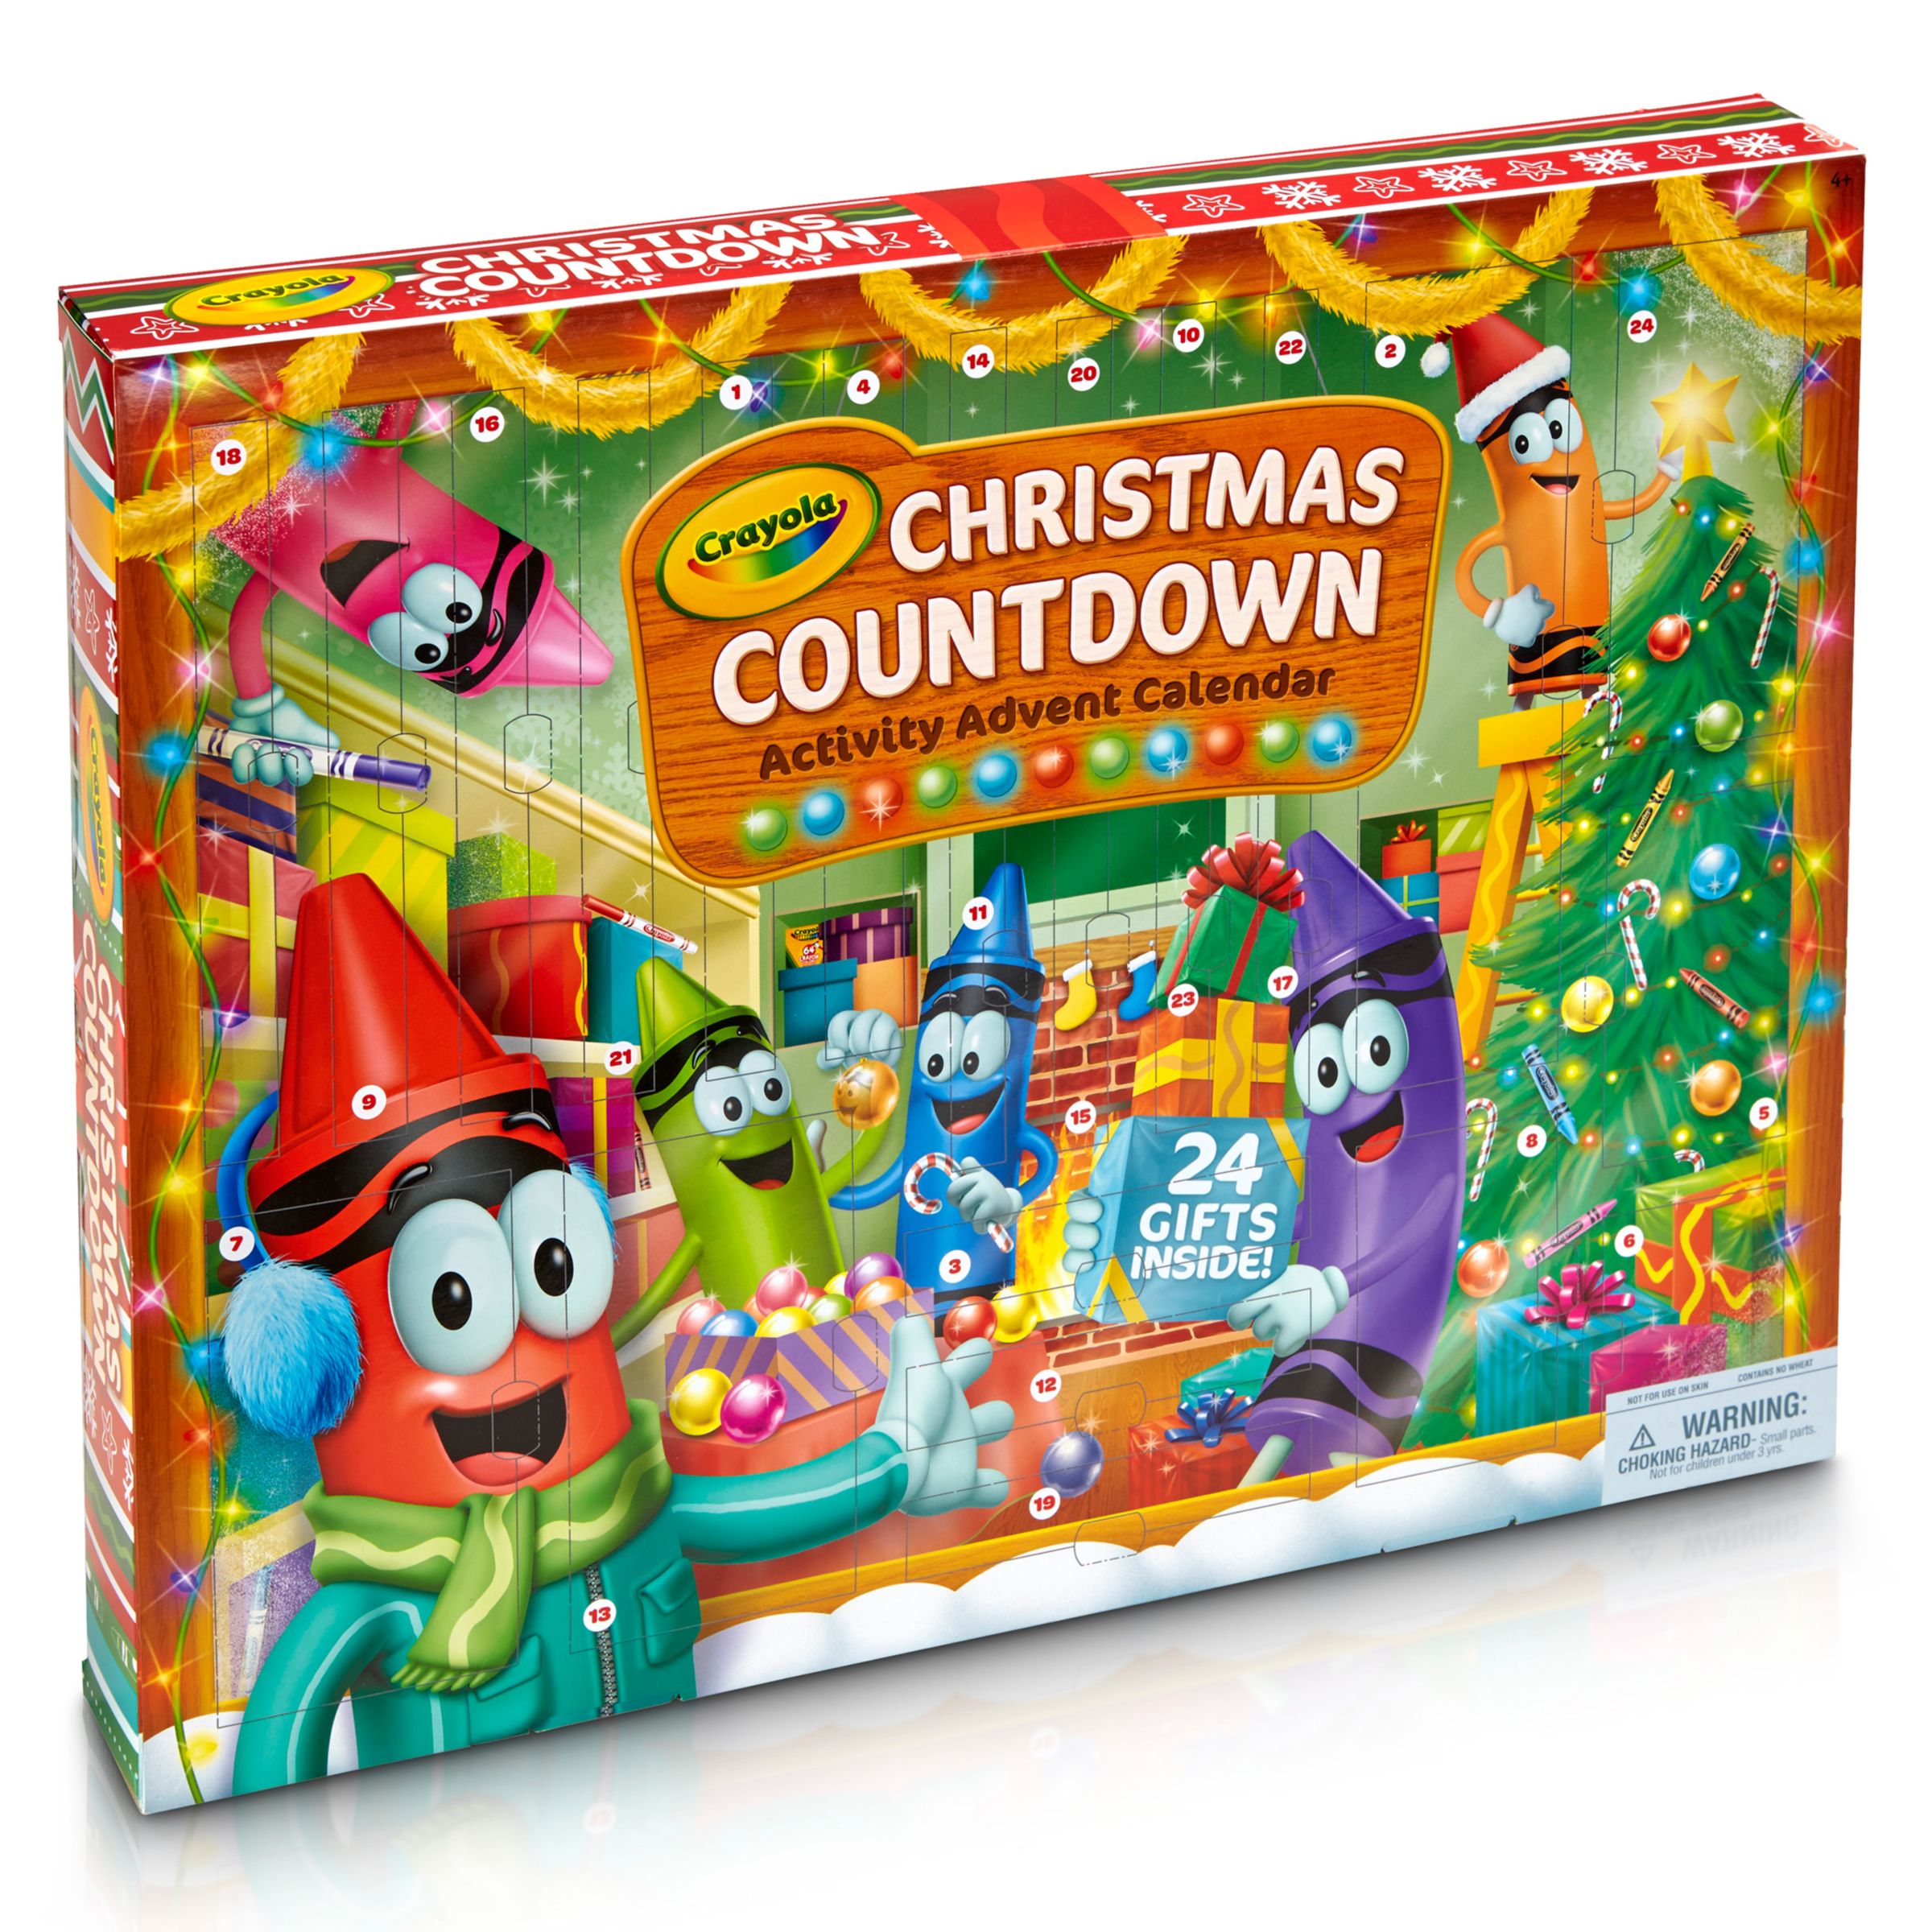 Crayola Christmas Countdown Activity Advent Calendar at John Lewis